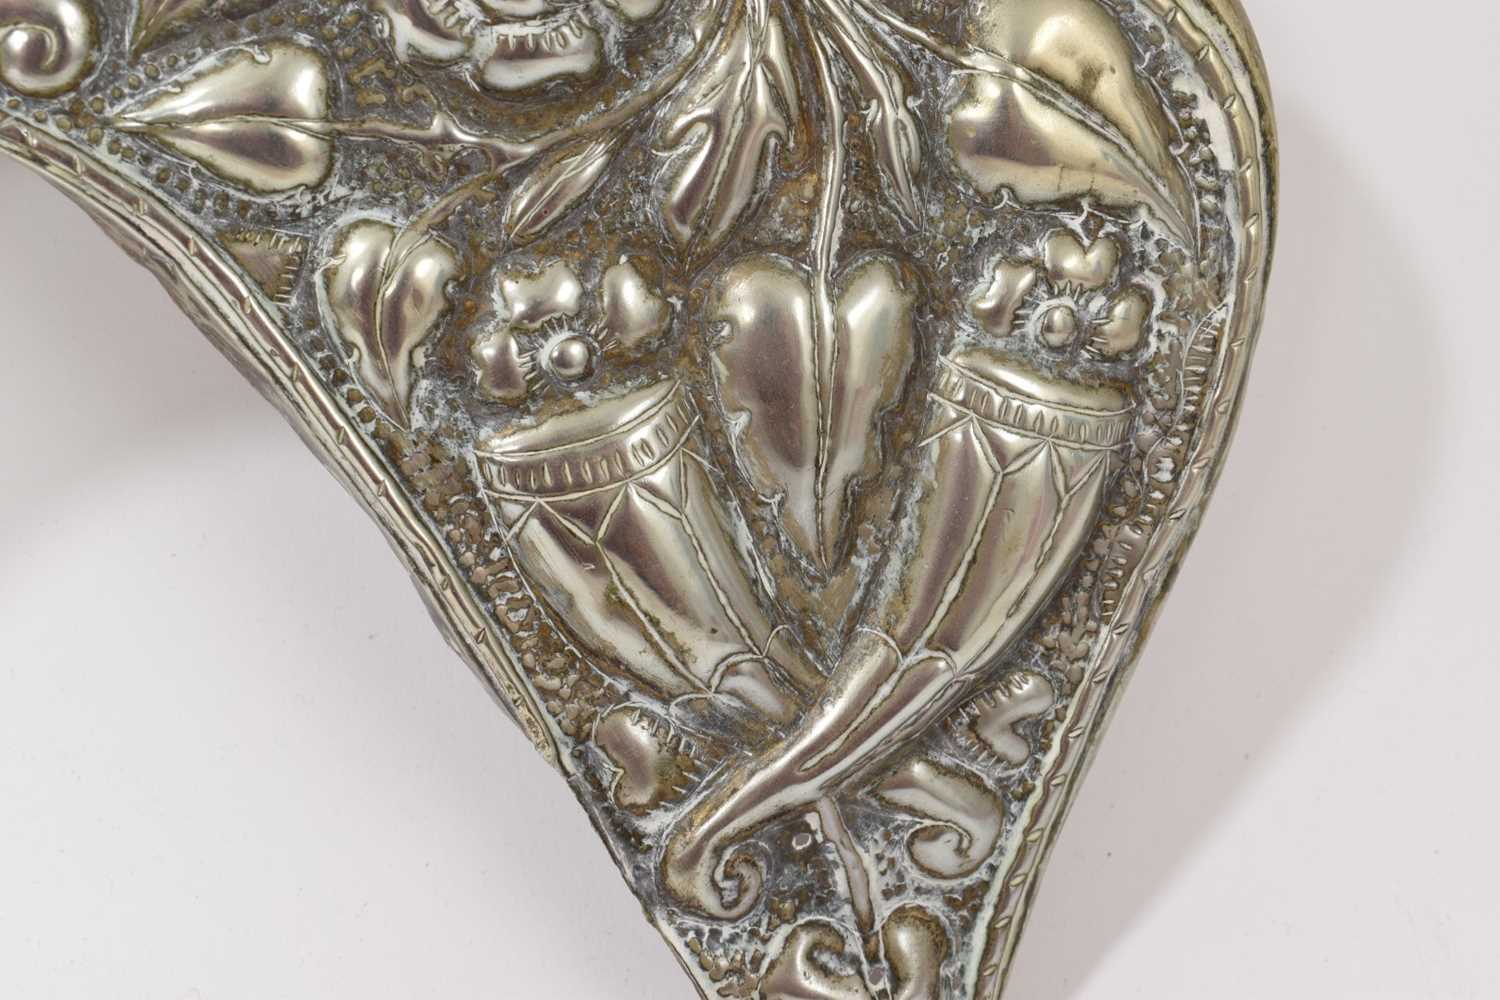 19th century South American white metal saddle mount - Image 4 of 5